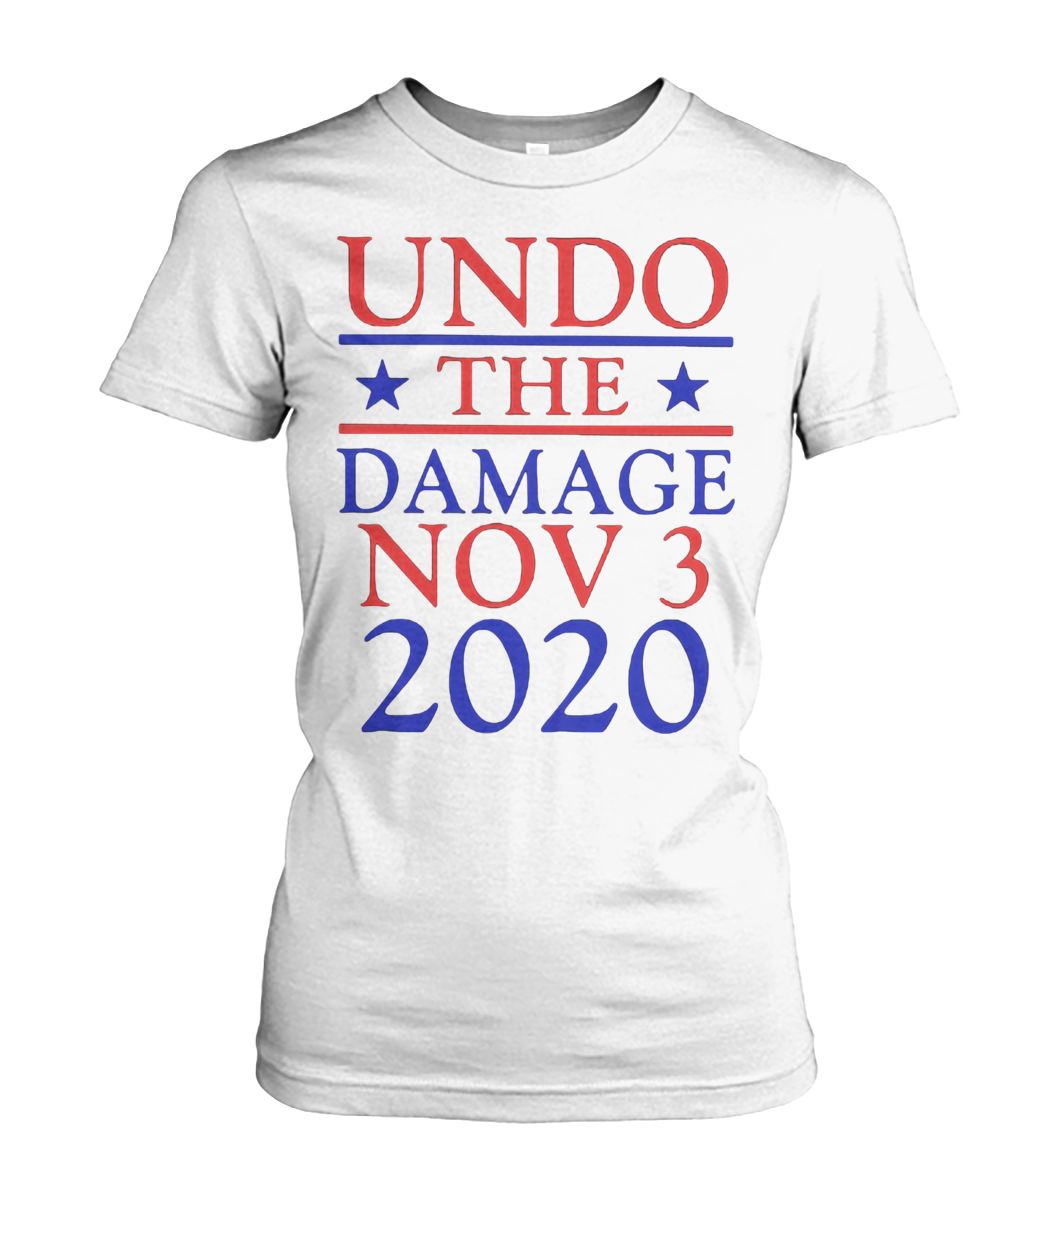 Undo the damage nov 3 2020 independent voters women's crew tee